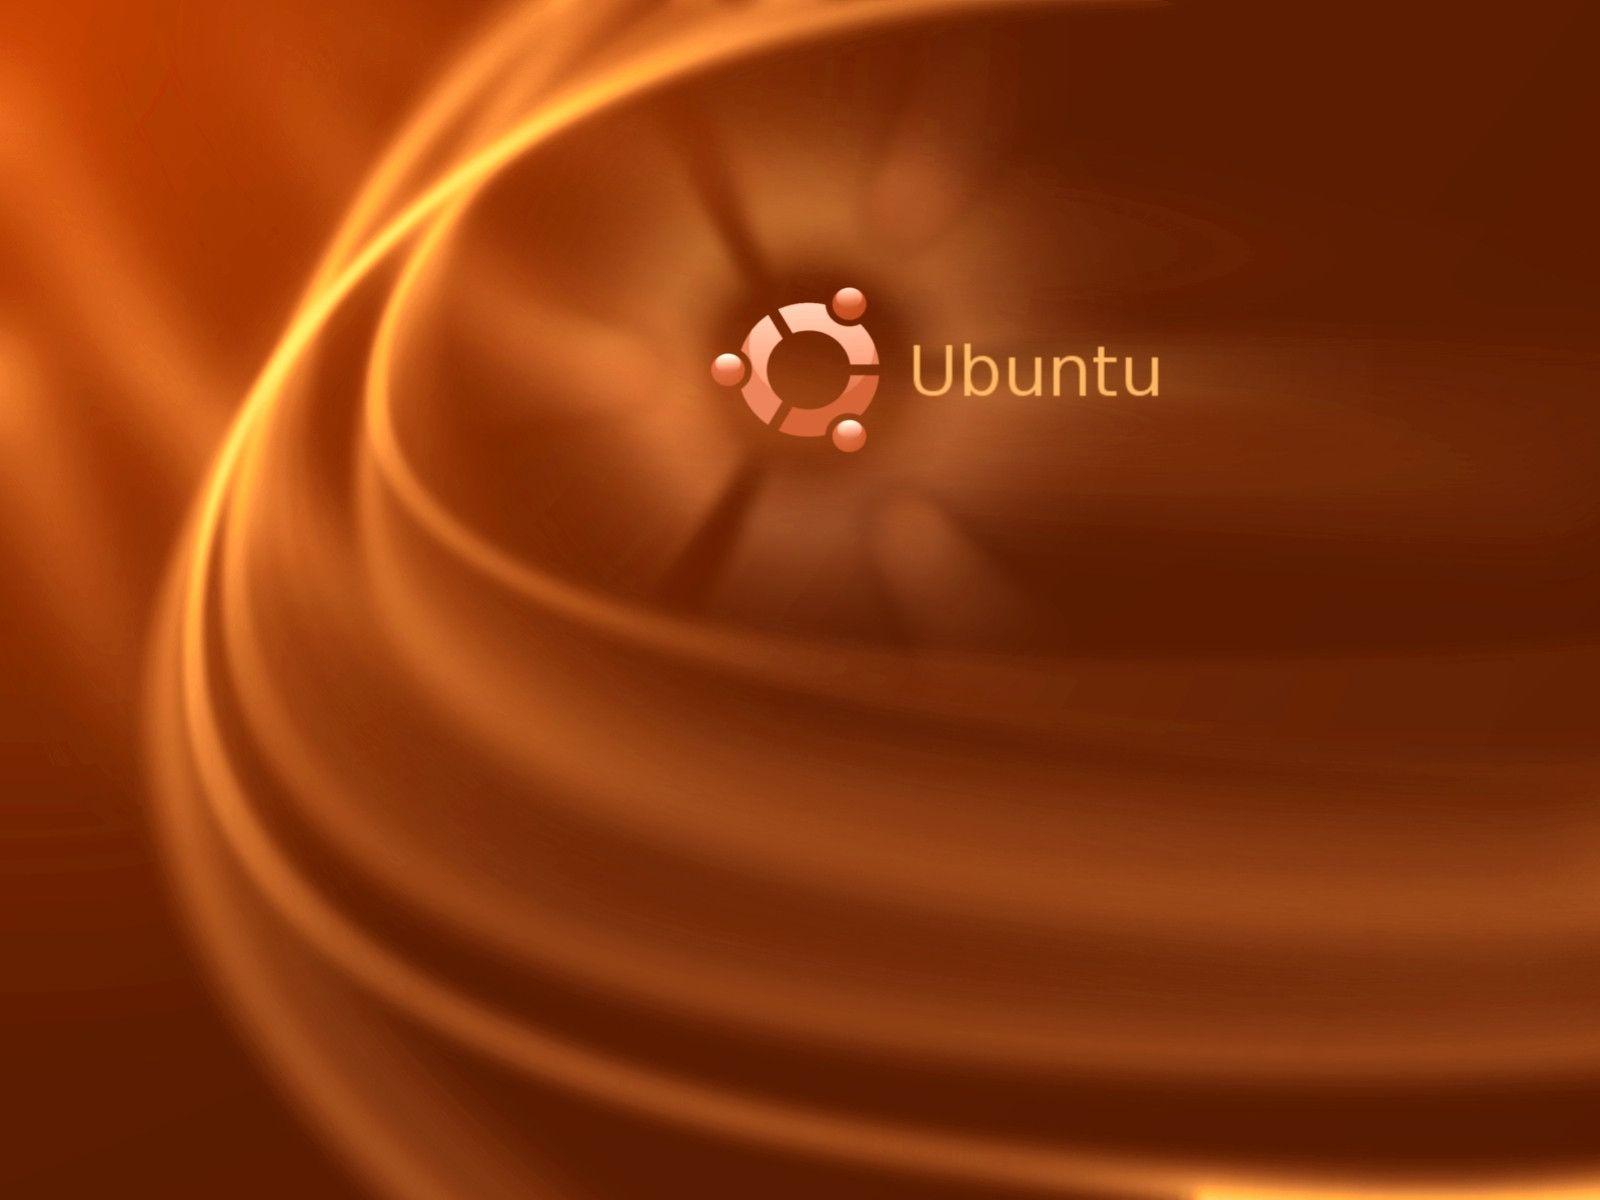 jfn linux project: Ubuntu Wallpaper